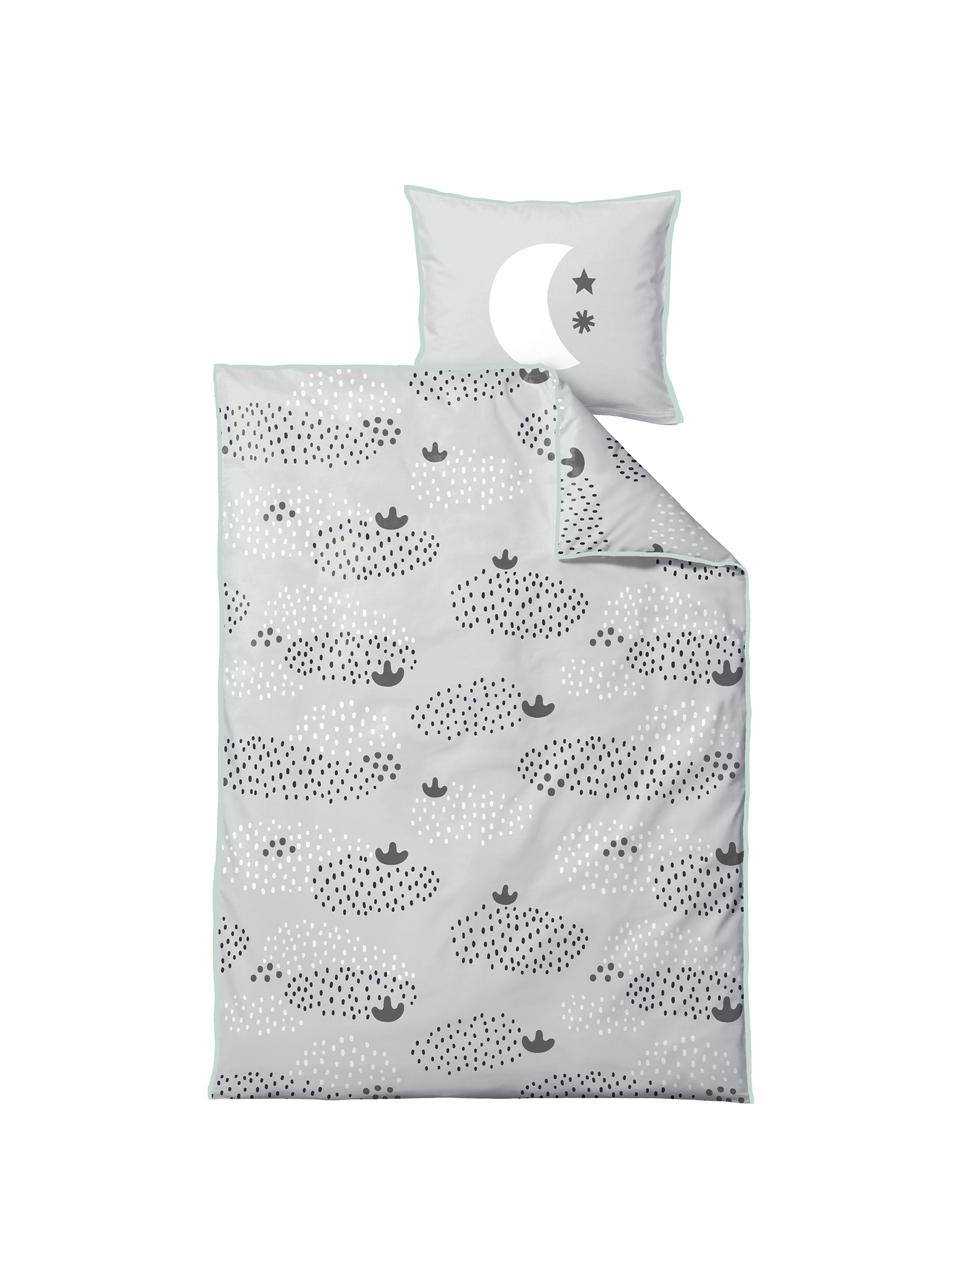 Ropa de cama de algodón ecológico Raindrops, Gris, negro, blanco, Cuna (100 x 140 cm), 2 pzas.